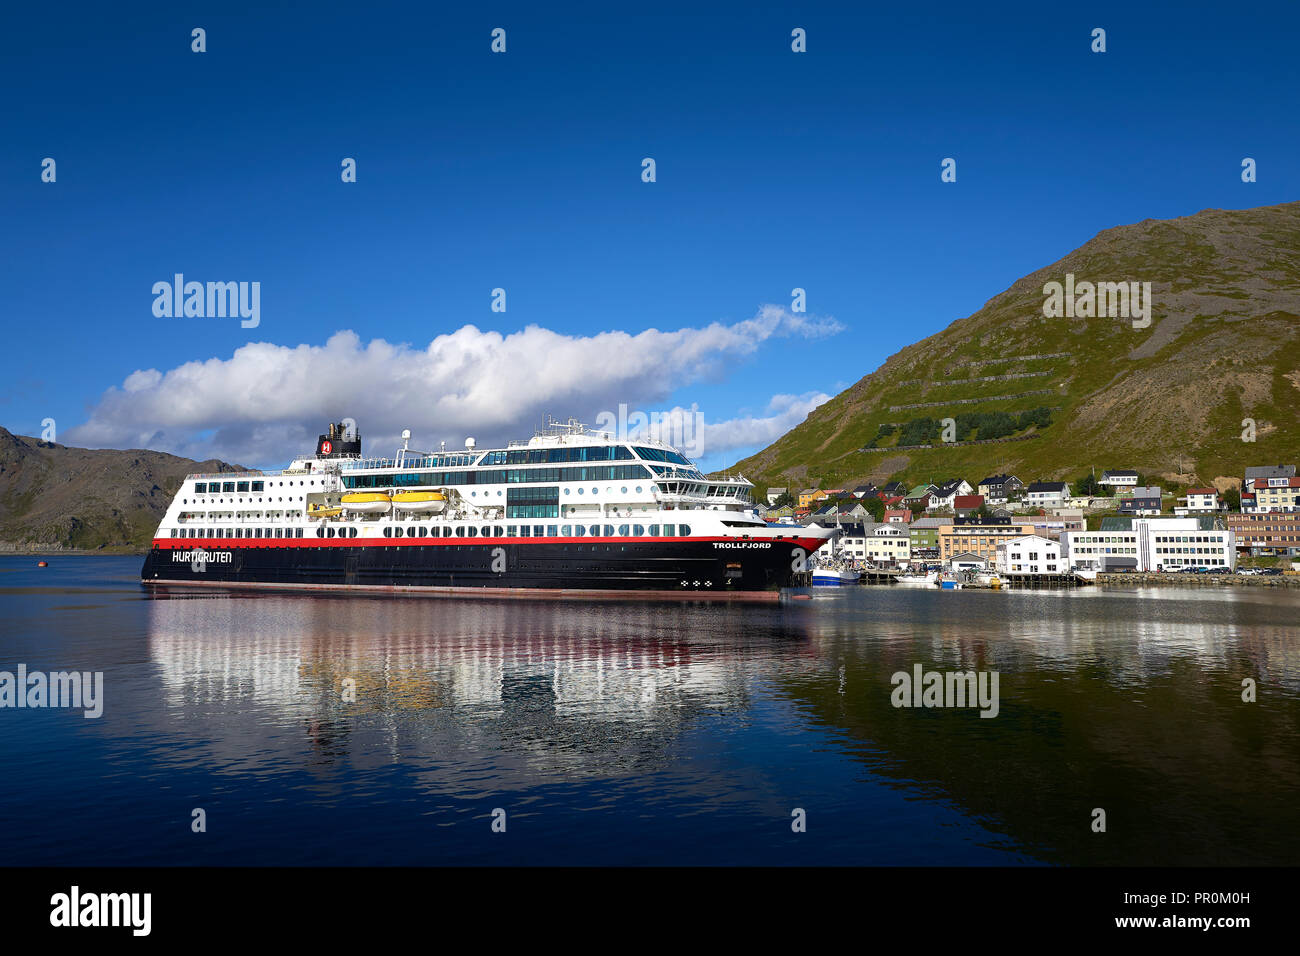 The Norwegian Hurtigruten Ship, MS TROLLFJORD, Moored In The Arctic Fishing Village Of Honningsvåg, Finnmark County, Norway. Stock Photo